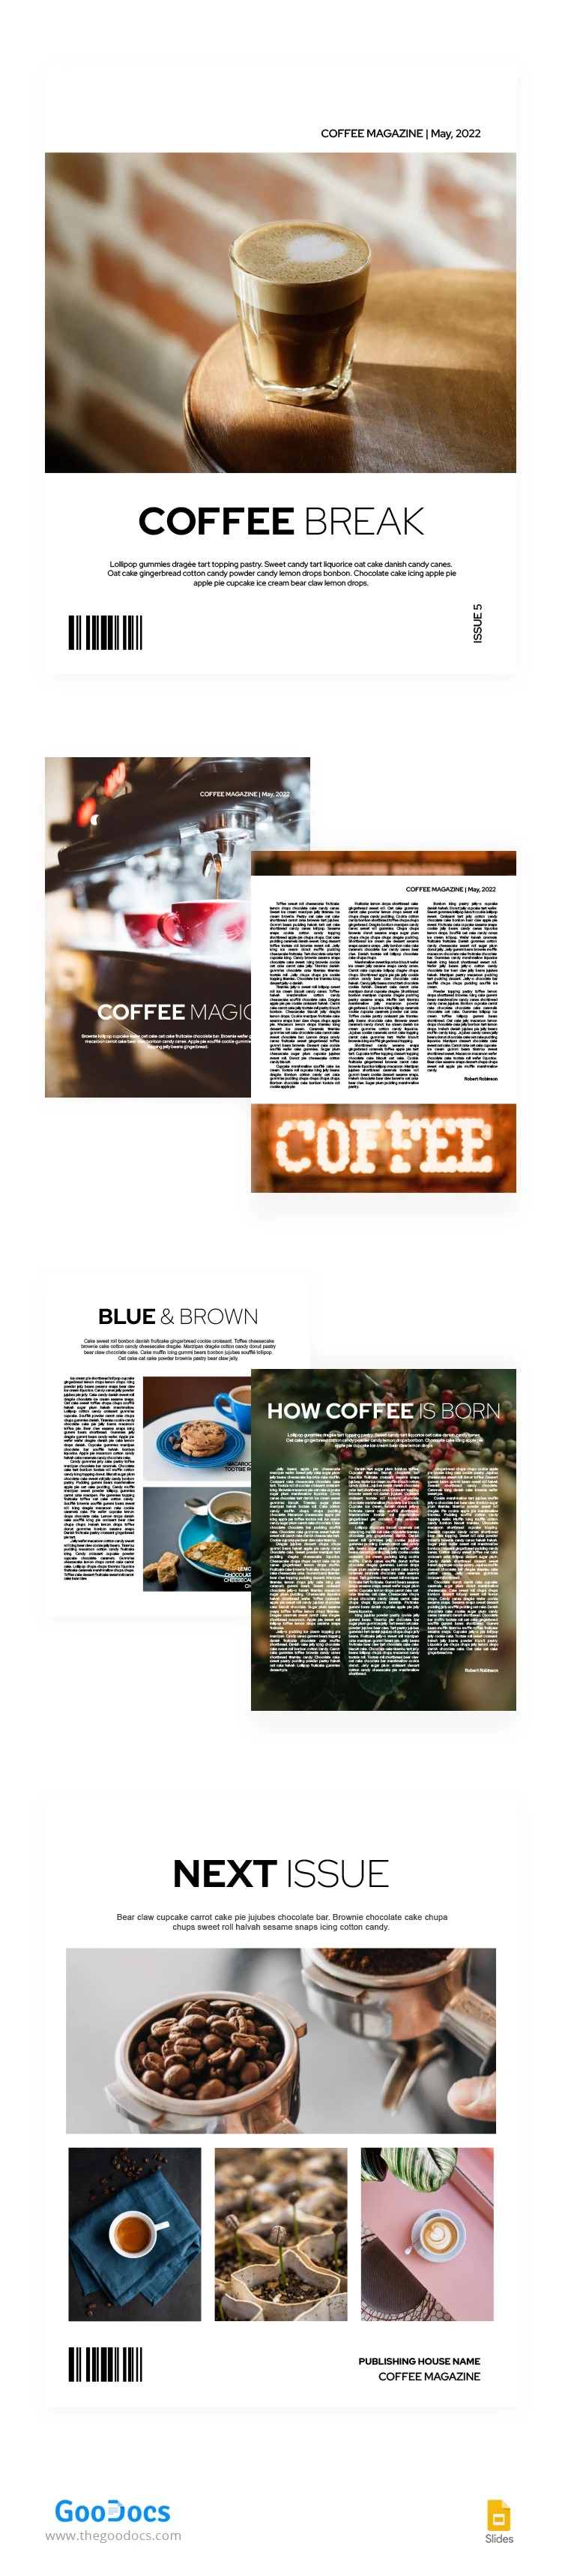 Basic Coffee Magazine - free Google Docs Template - 10063711